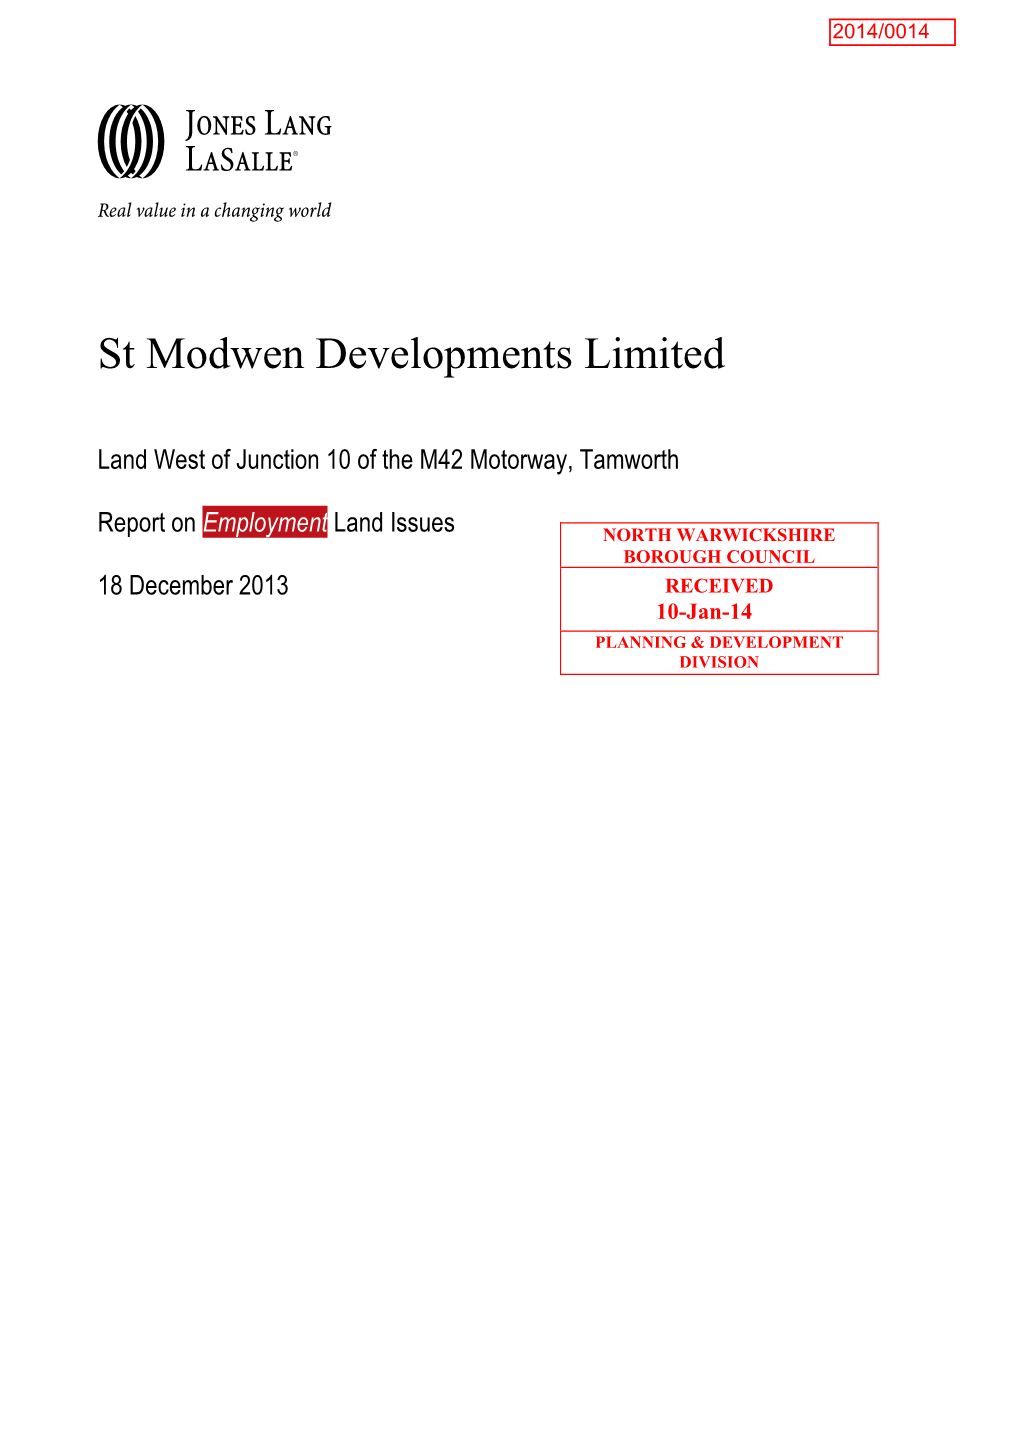 St Modwen Developments Limited